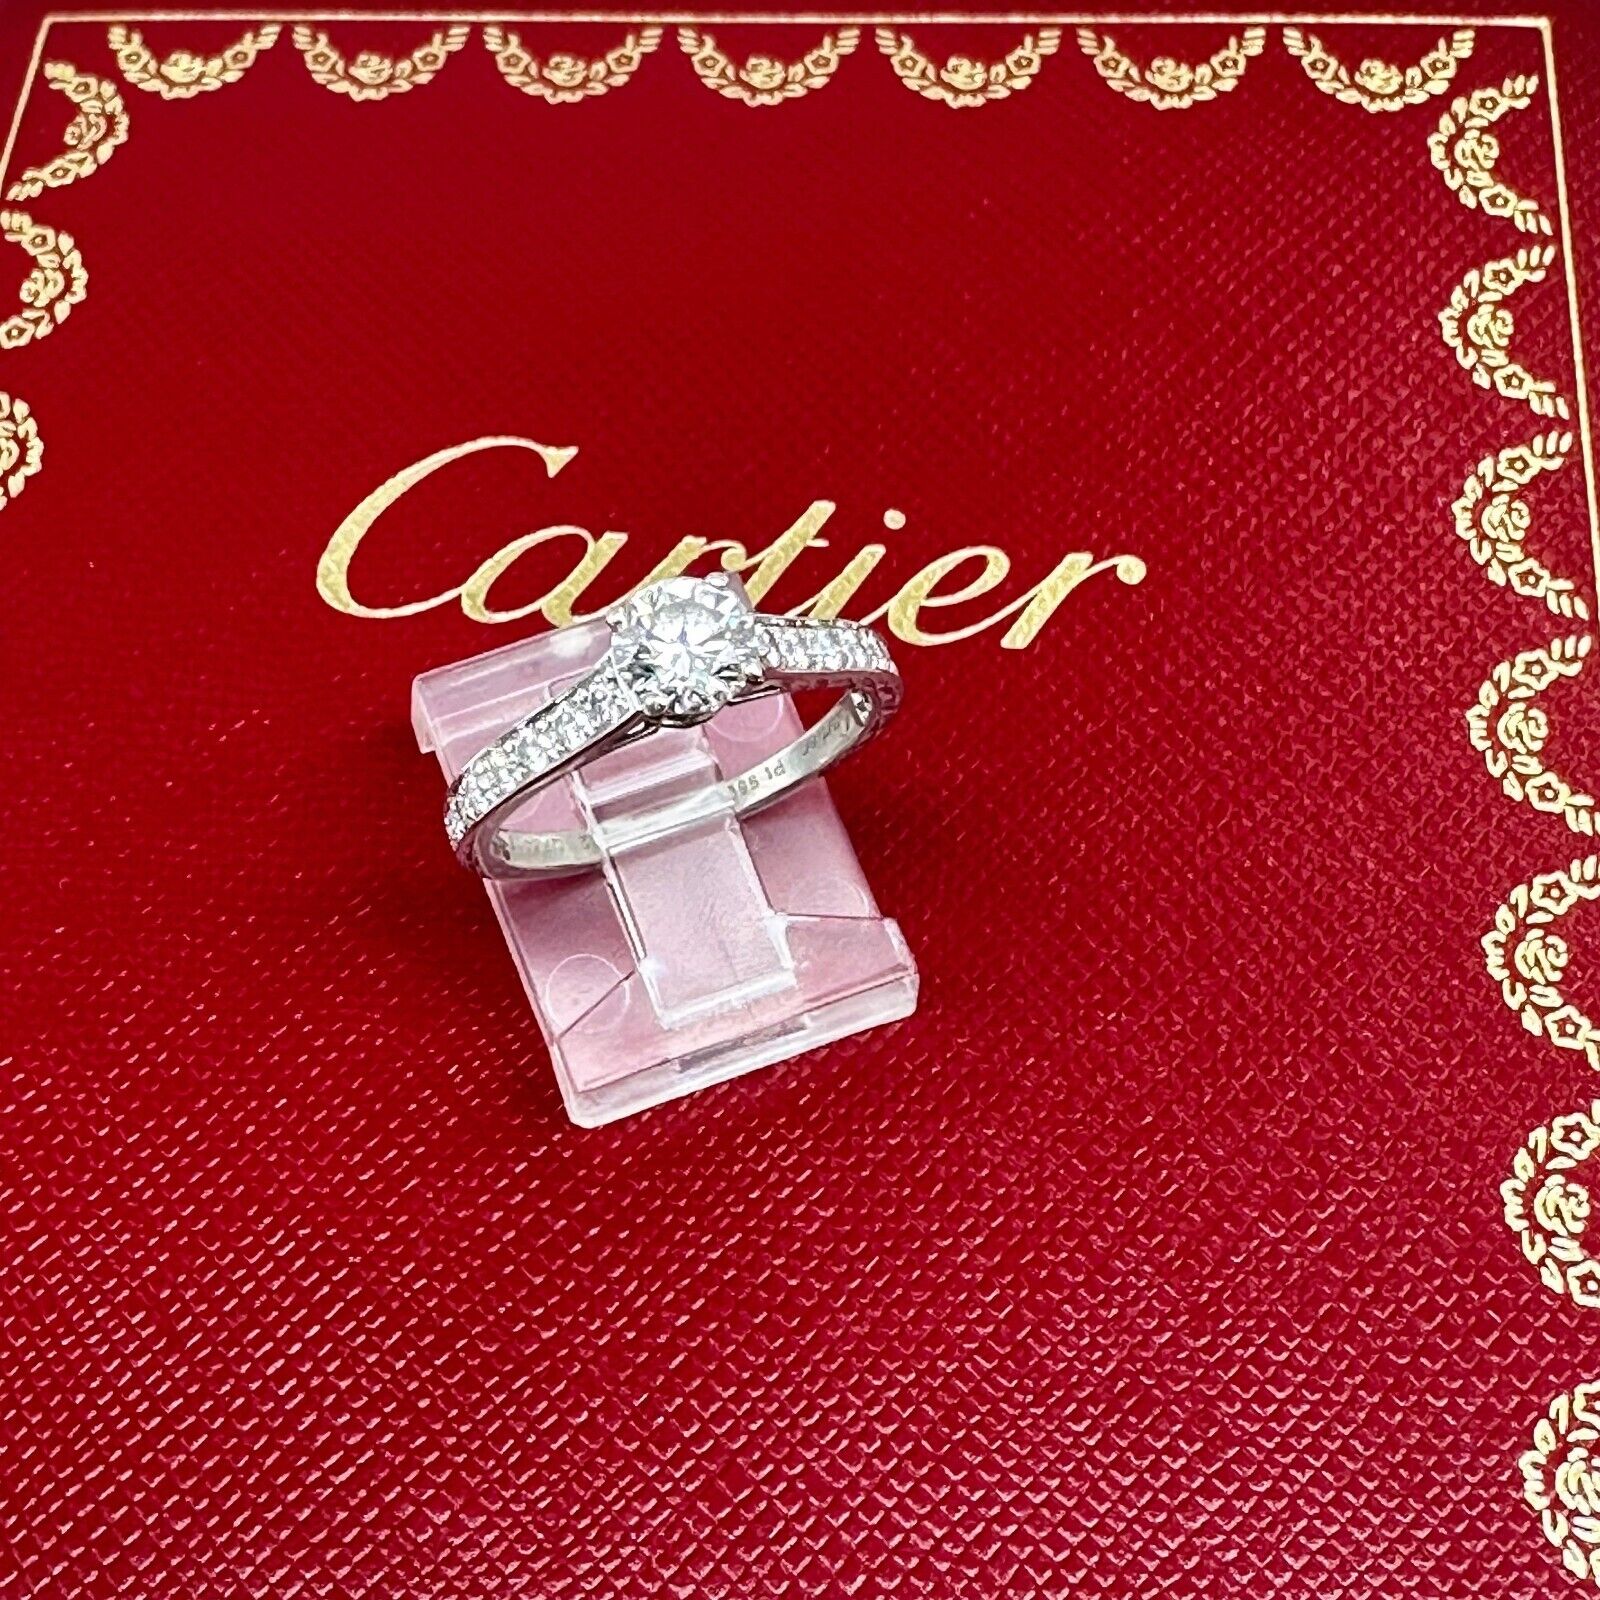 3.02 Carat Cartier Diamond Ring -V18572 | vividdiamonds